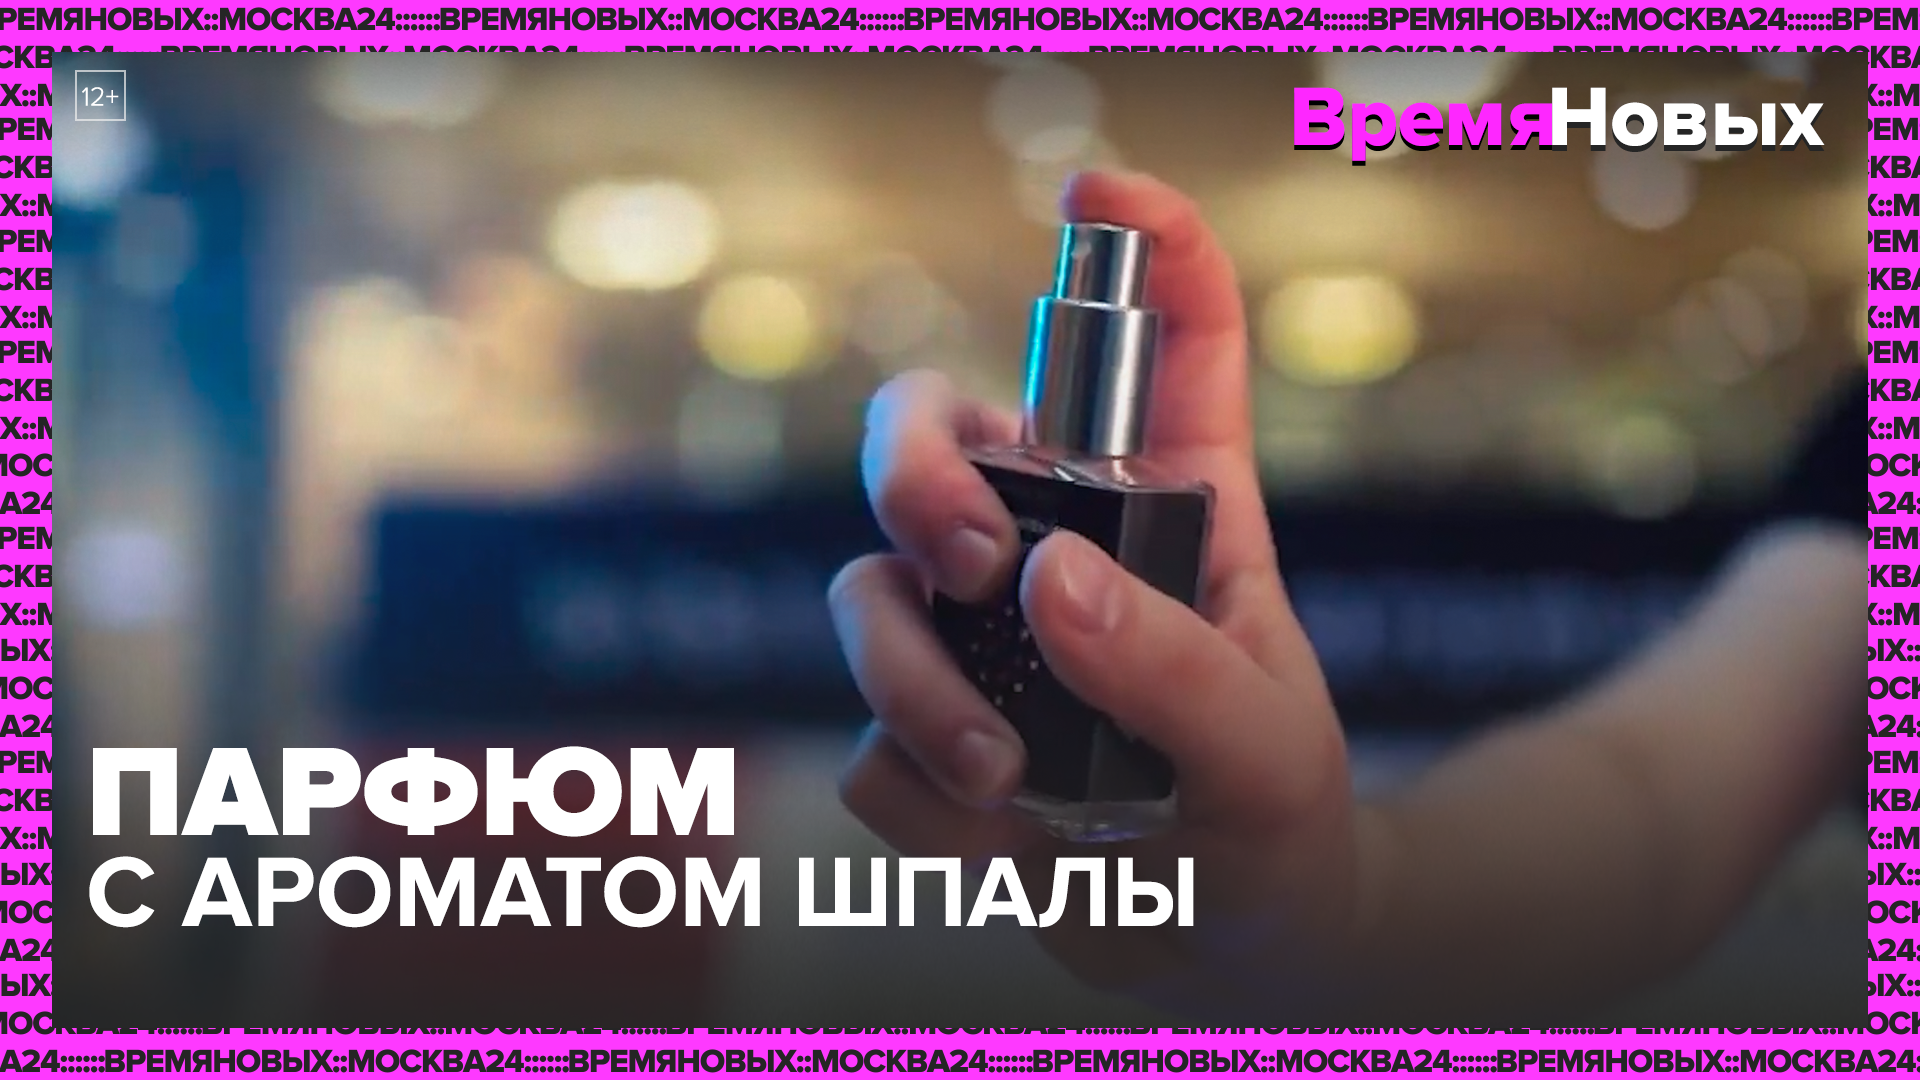 Парфюм с запахом шпалы — Москва24|Контент